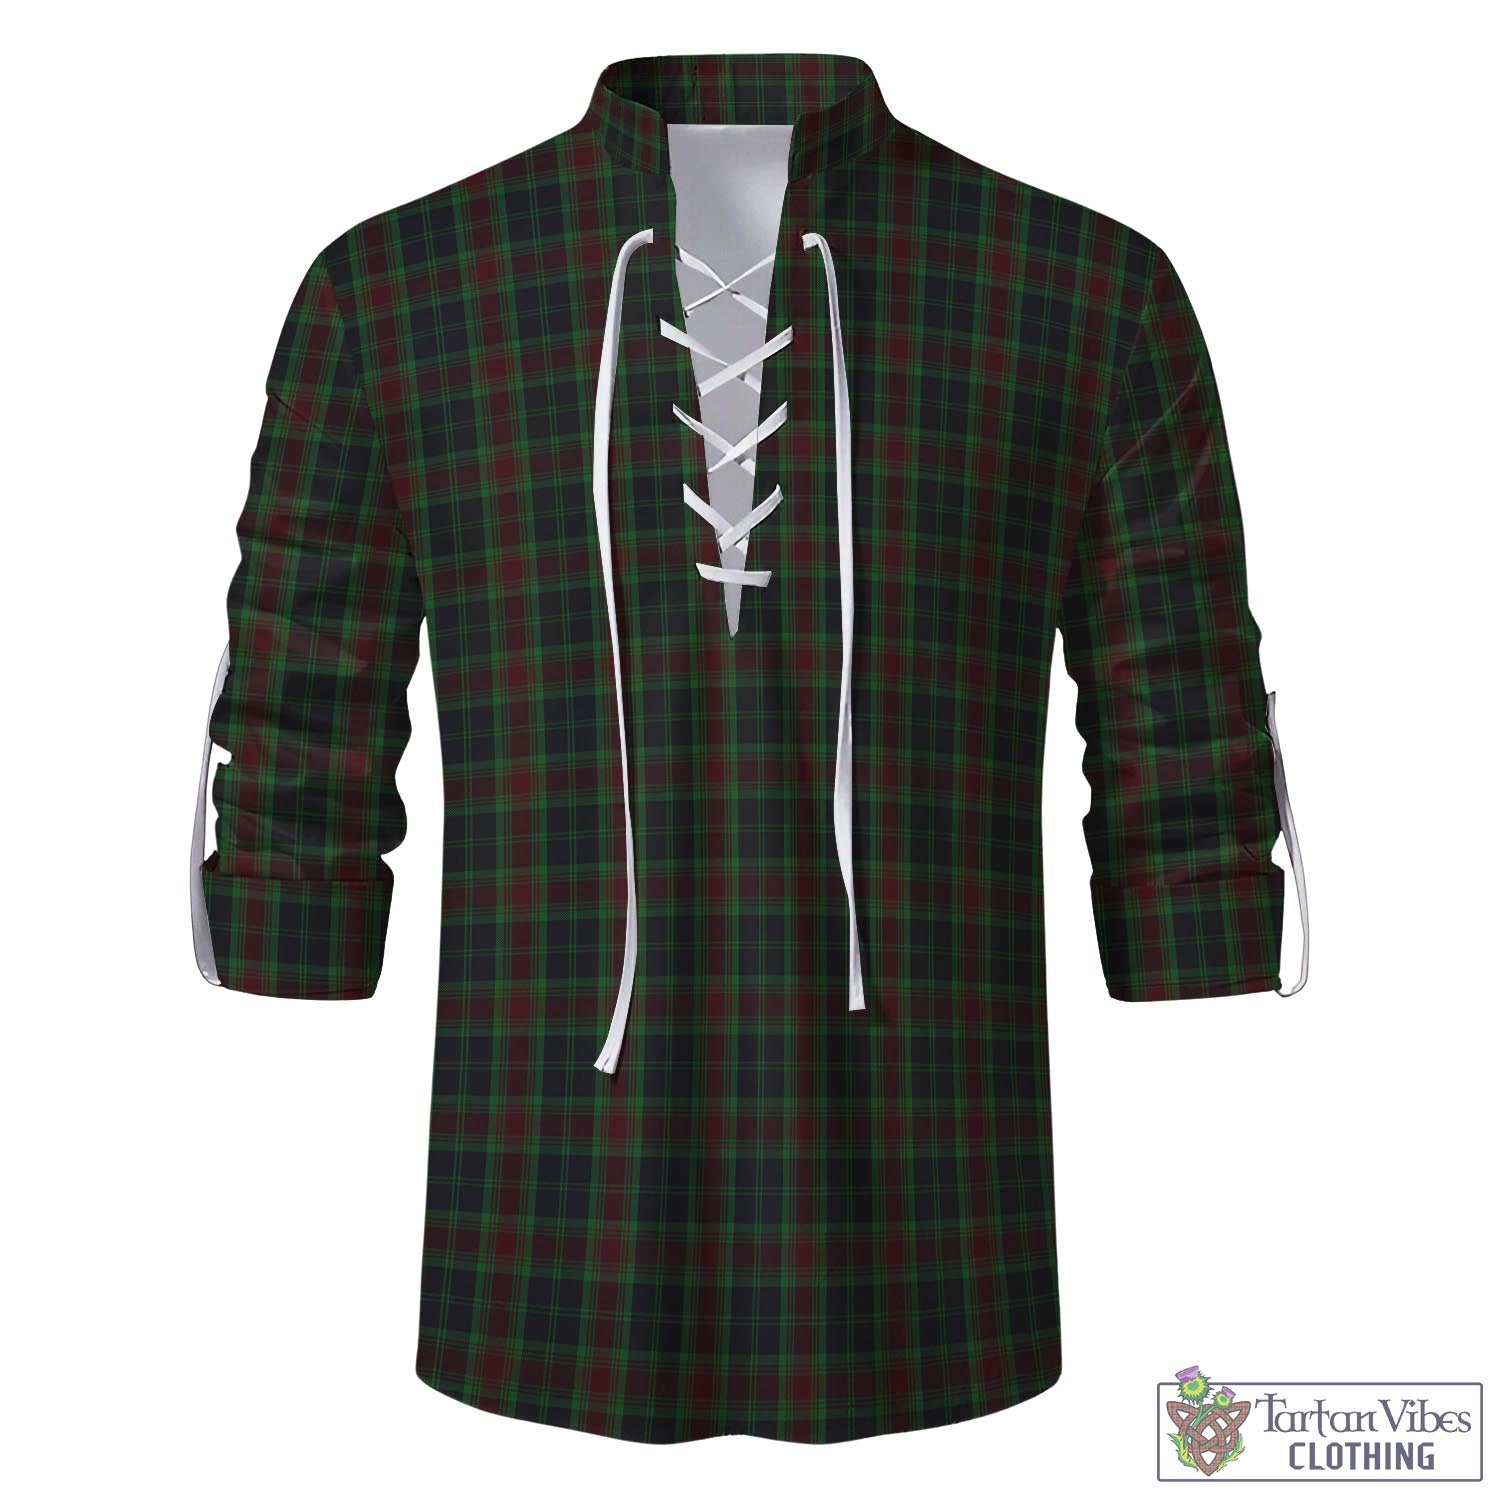 Tartan Vibes Clothing Carlow County Ireland Tartan Men's Scottish Traditional Jacobite Ghillie Kilt Shirt